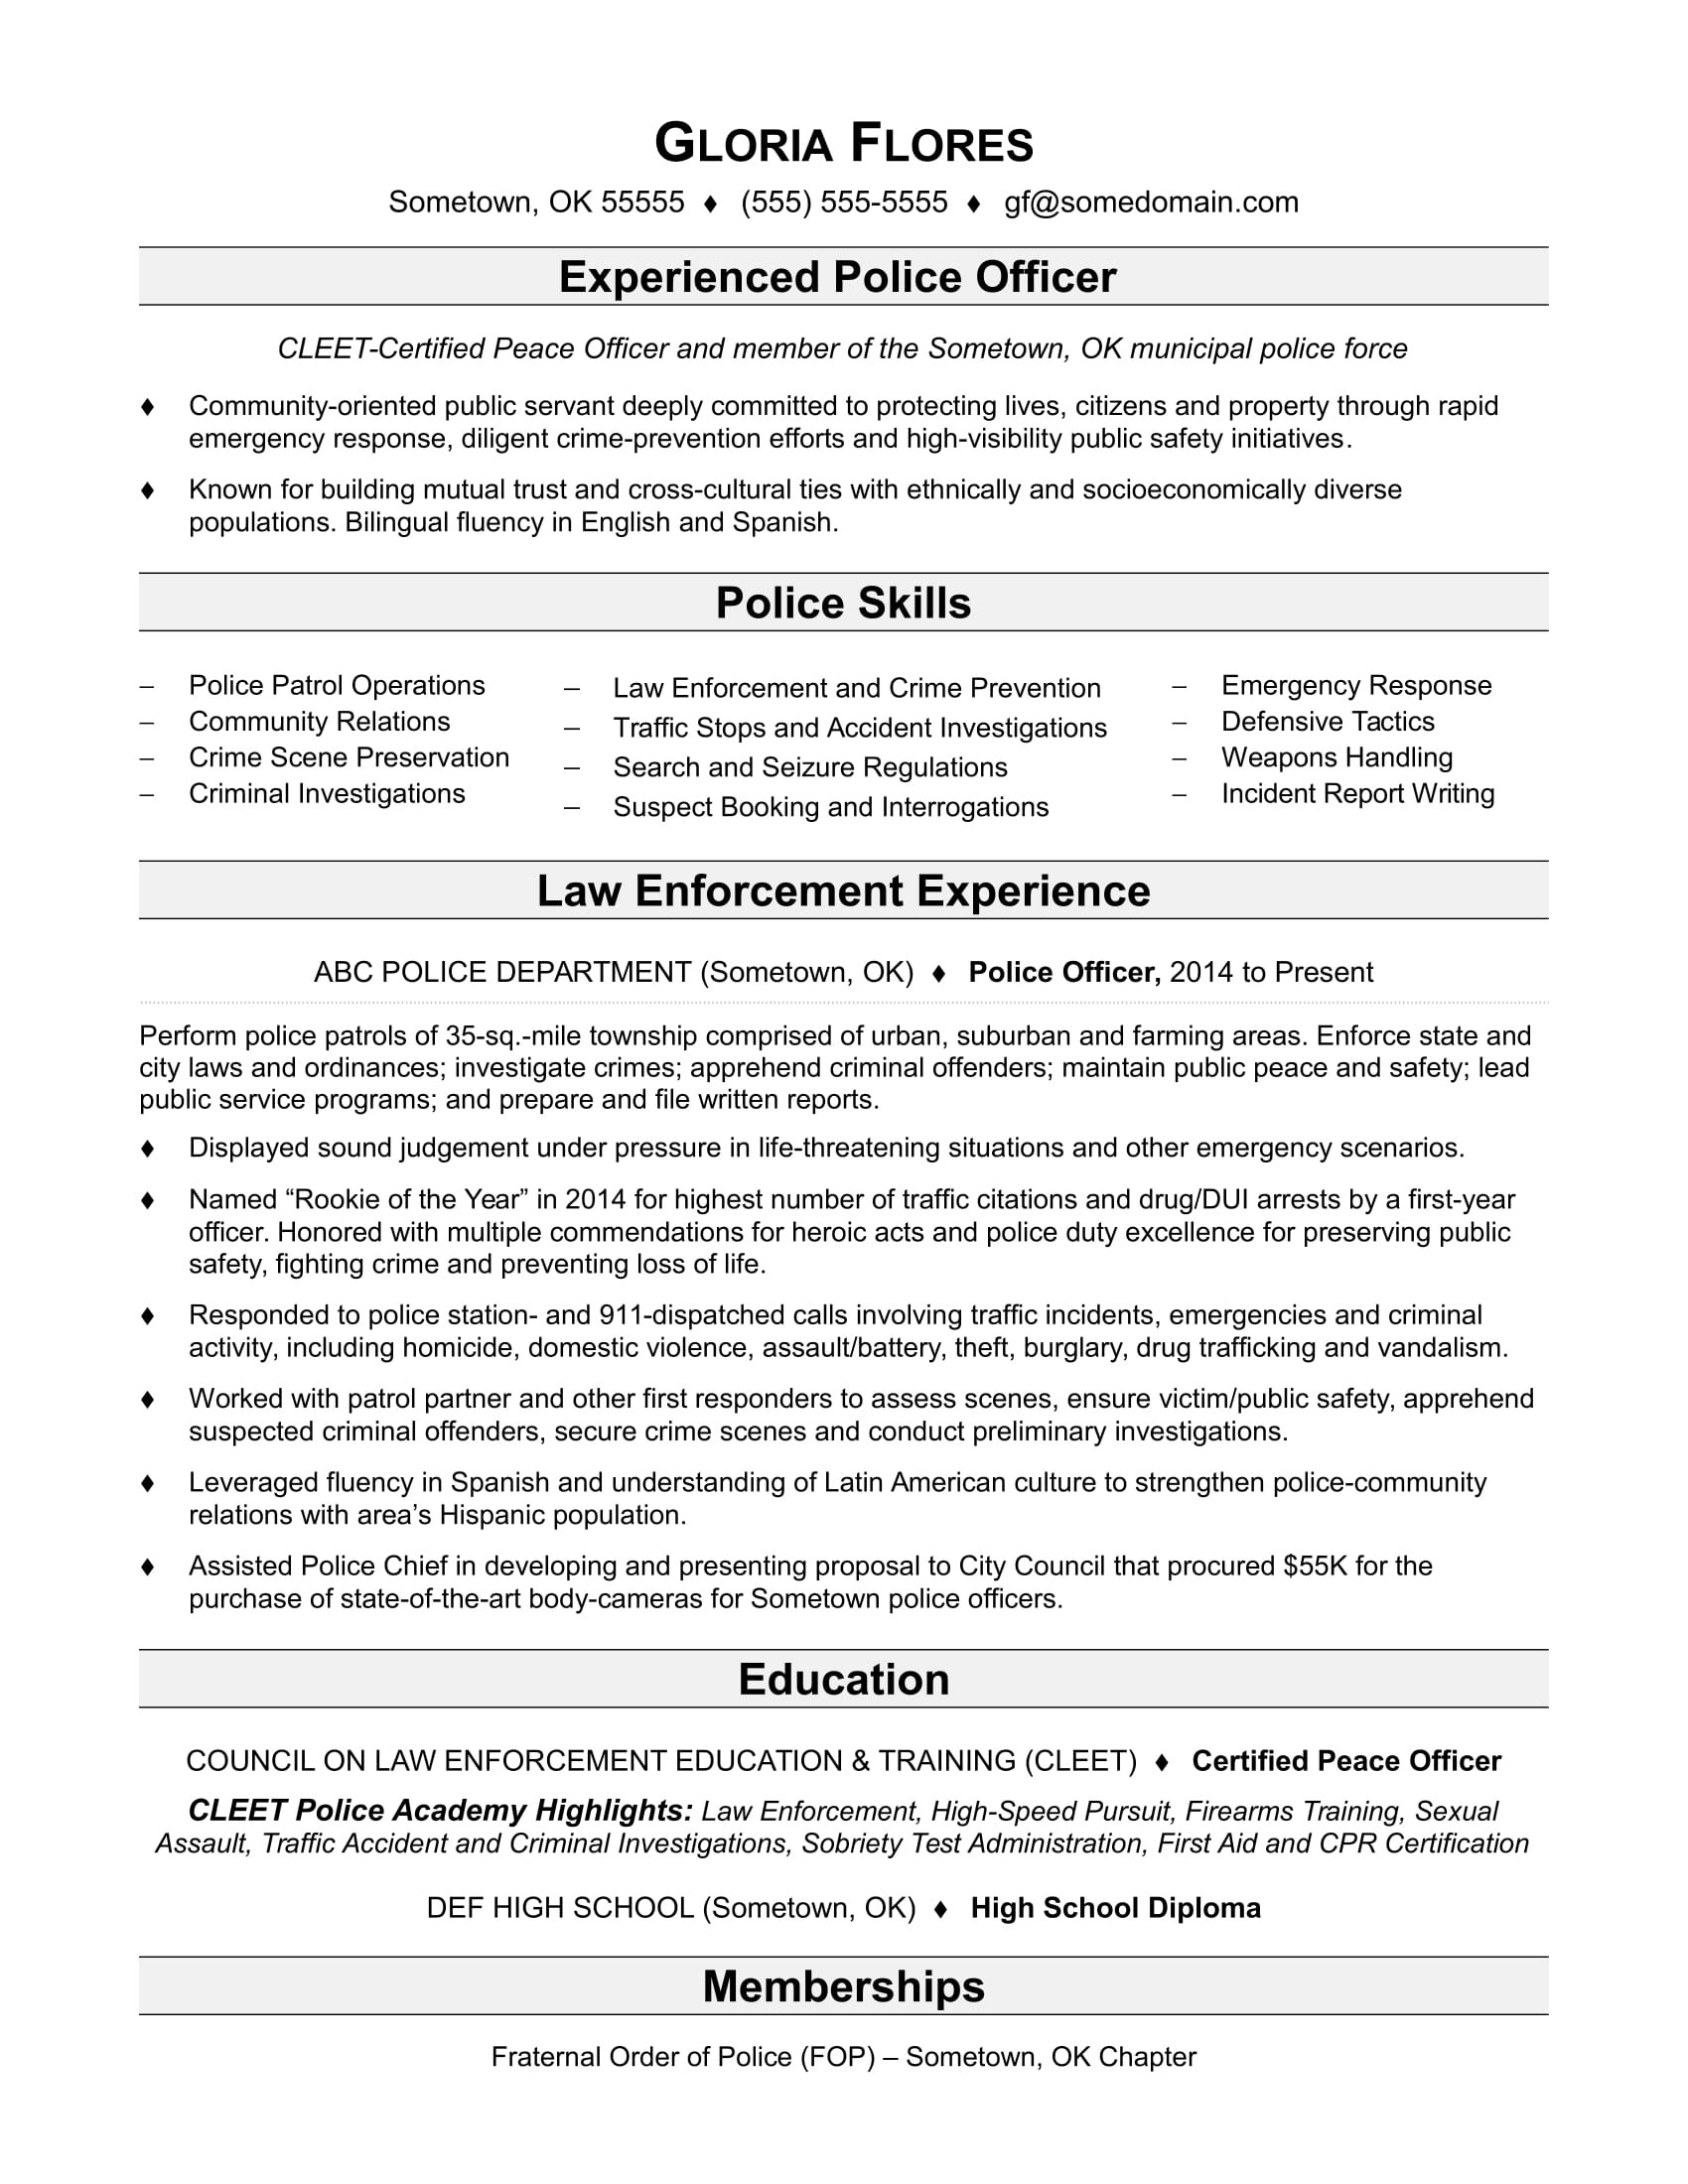 Deputy Sheriff Resume No Experience Sample Police Officer Resume Sample Monster.com